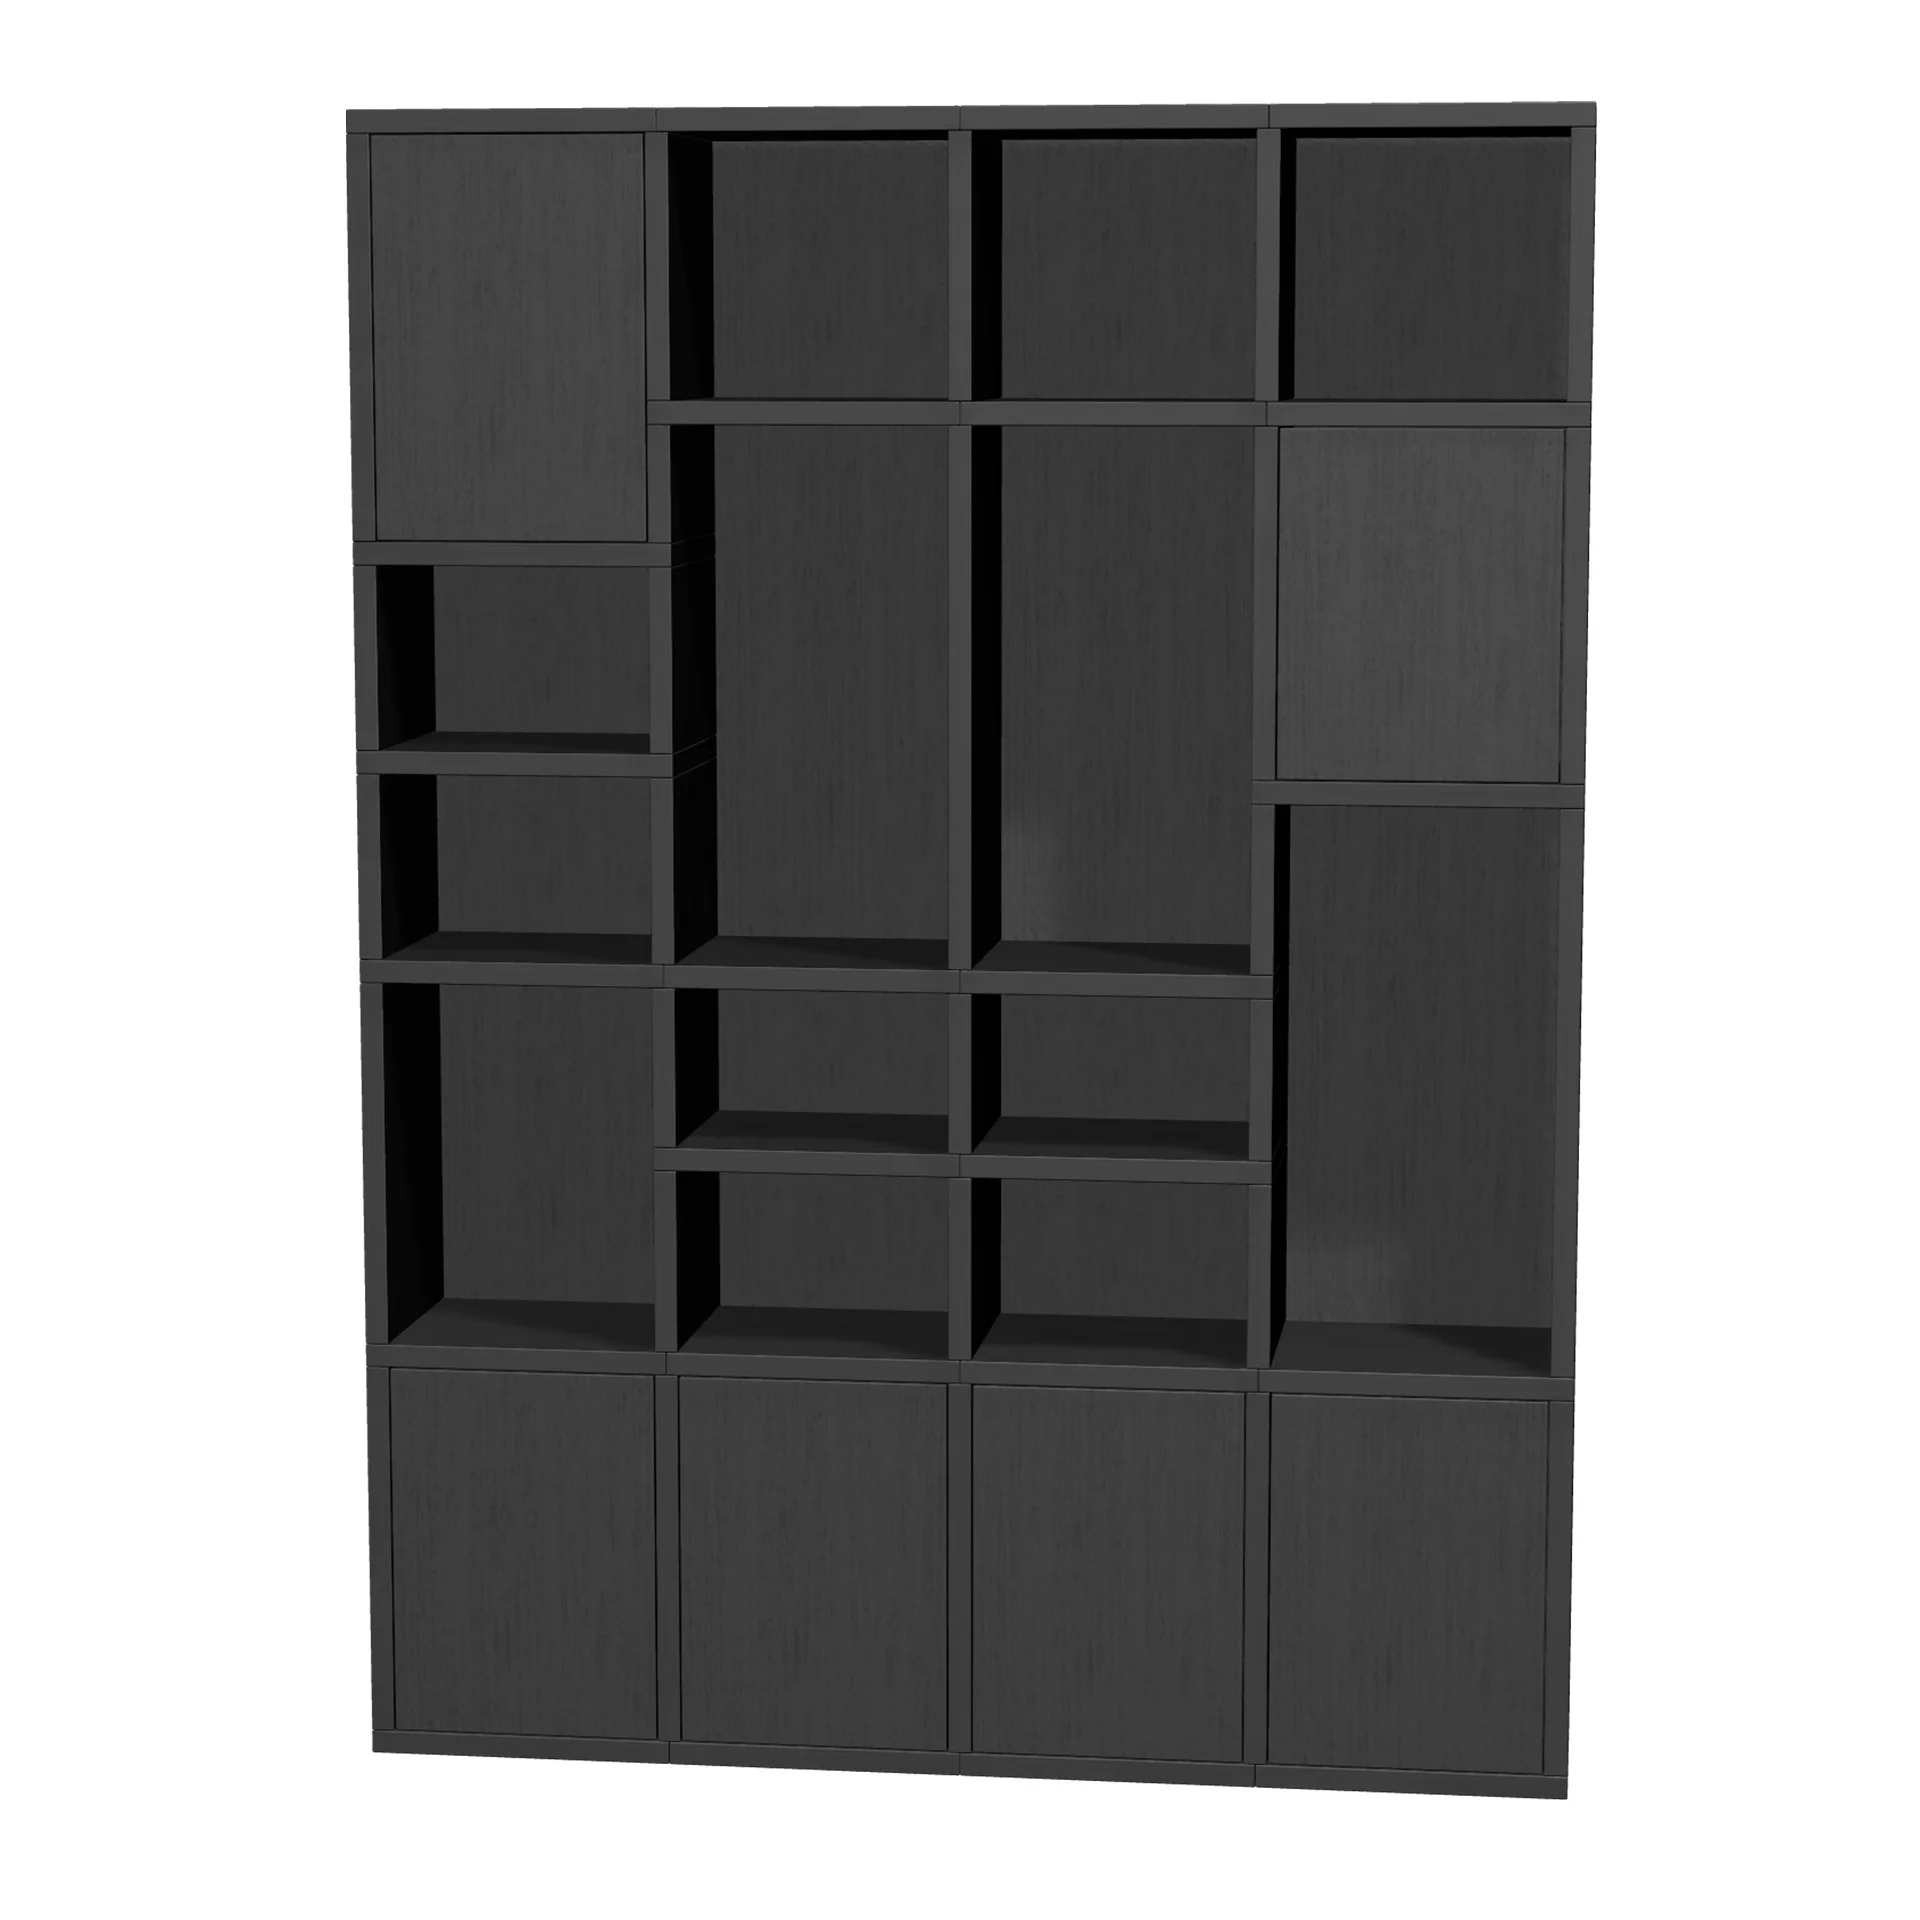 TSFC007 en panel mueble roble negro